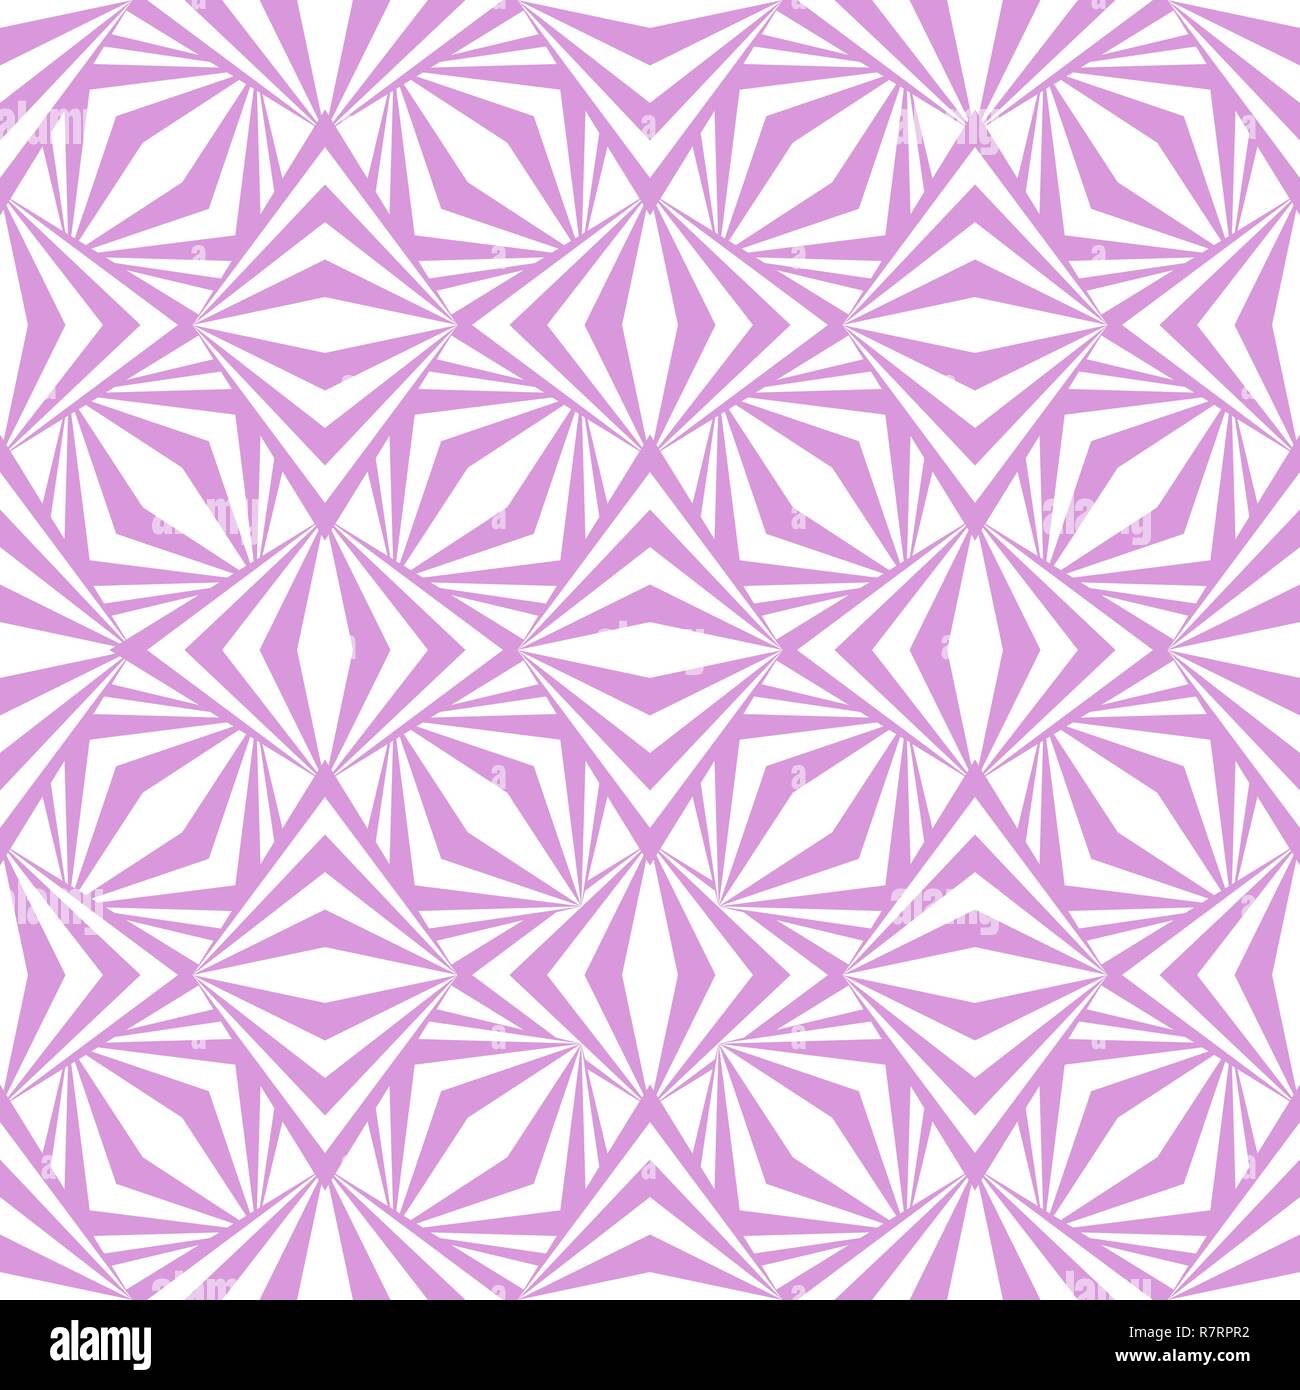 Art abstract geometric light white pink pattern Stock Vector